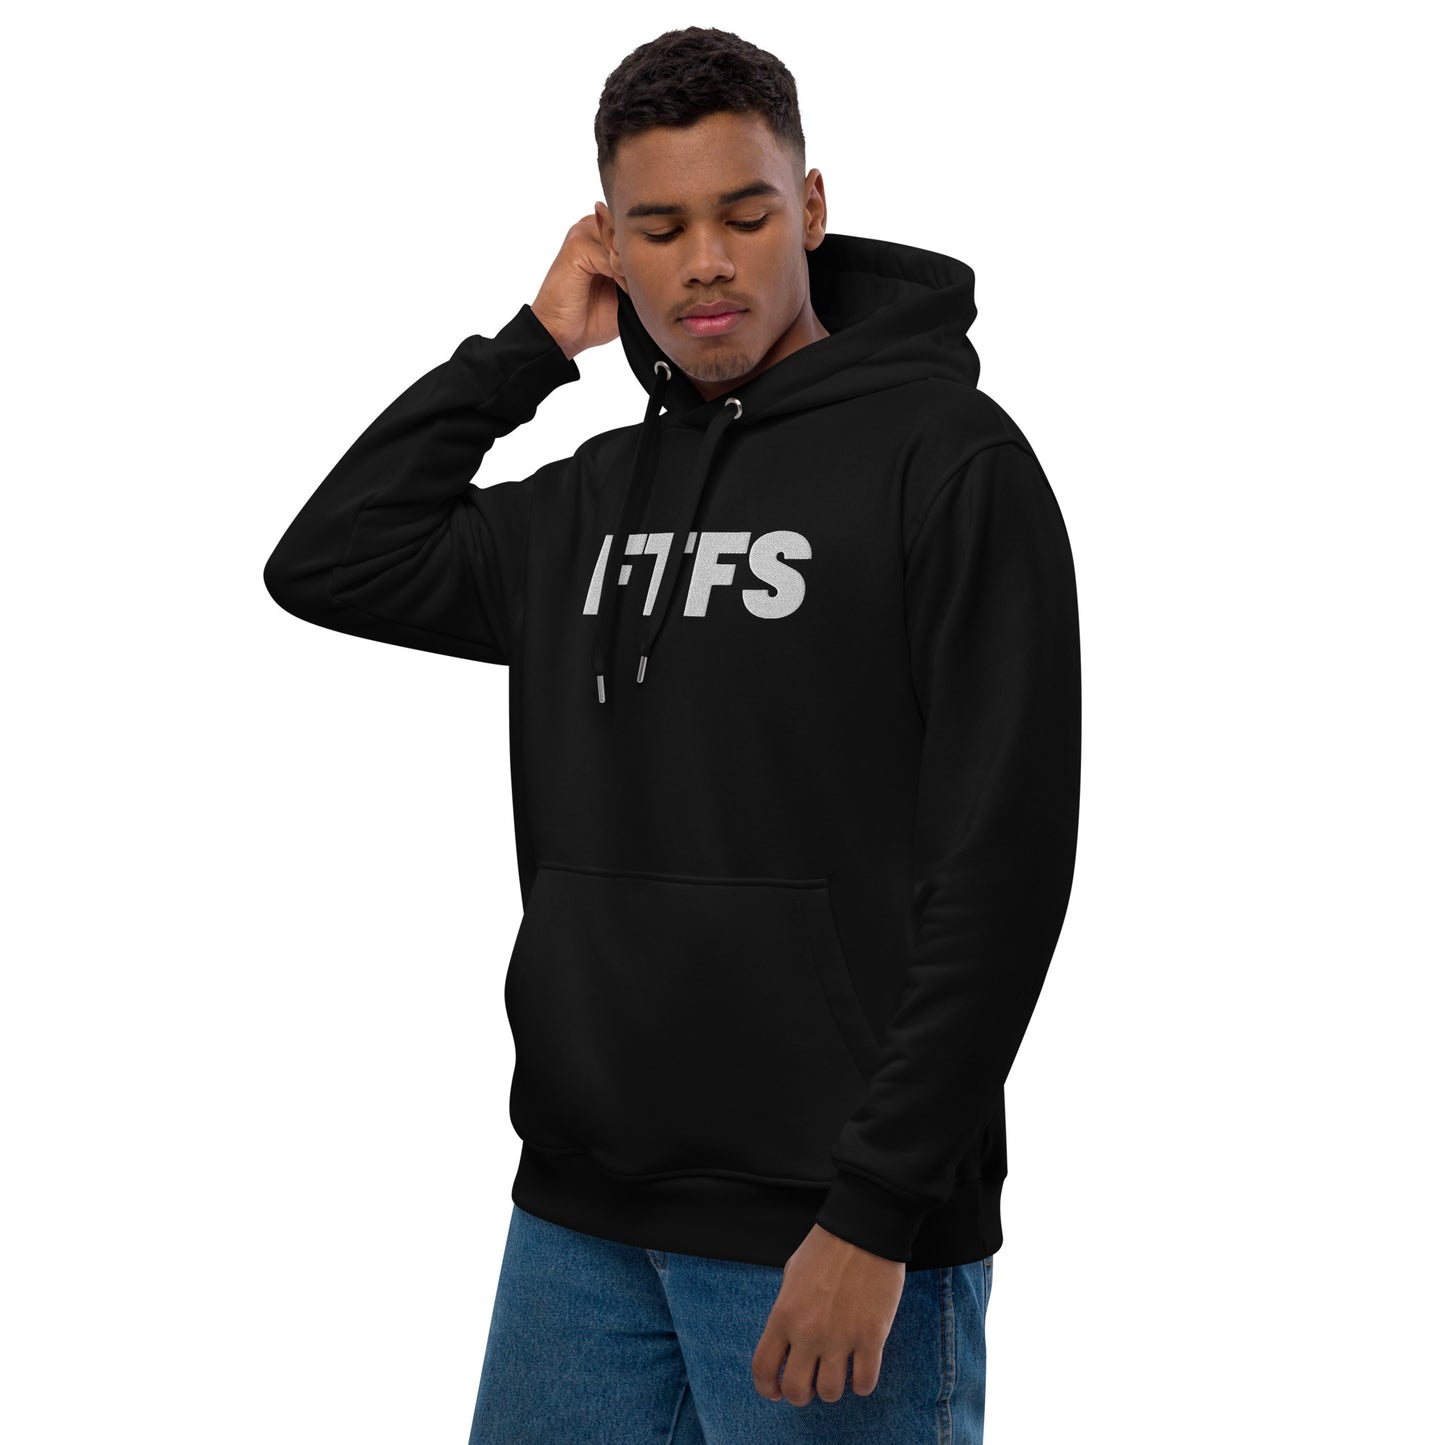 FTFS Premium eco hoodie